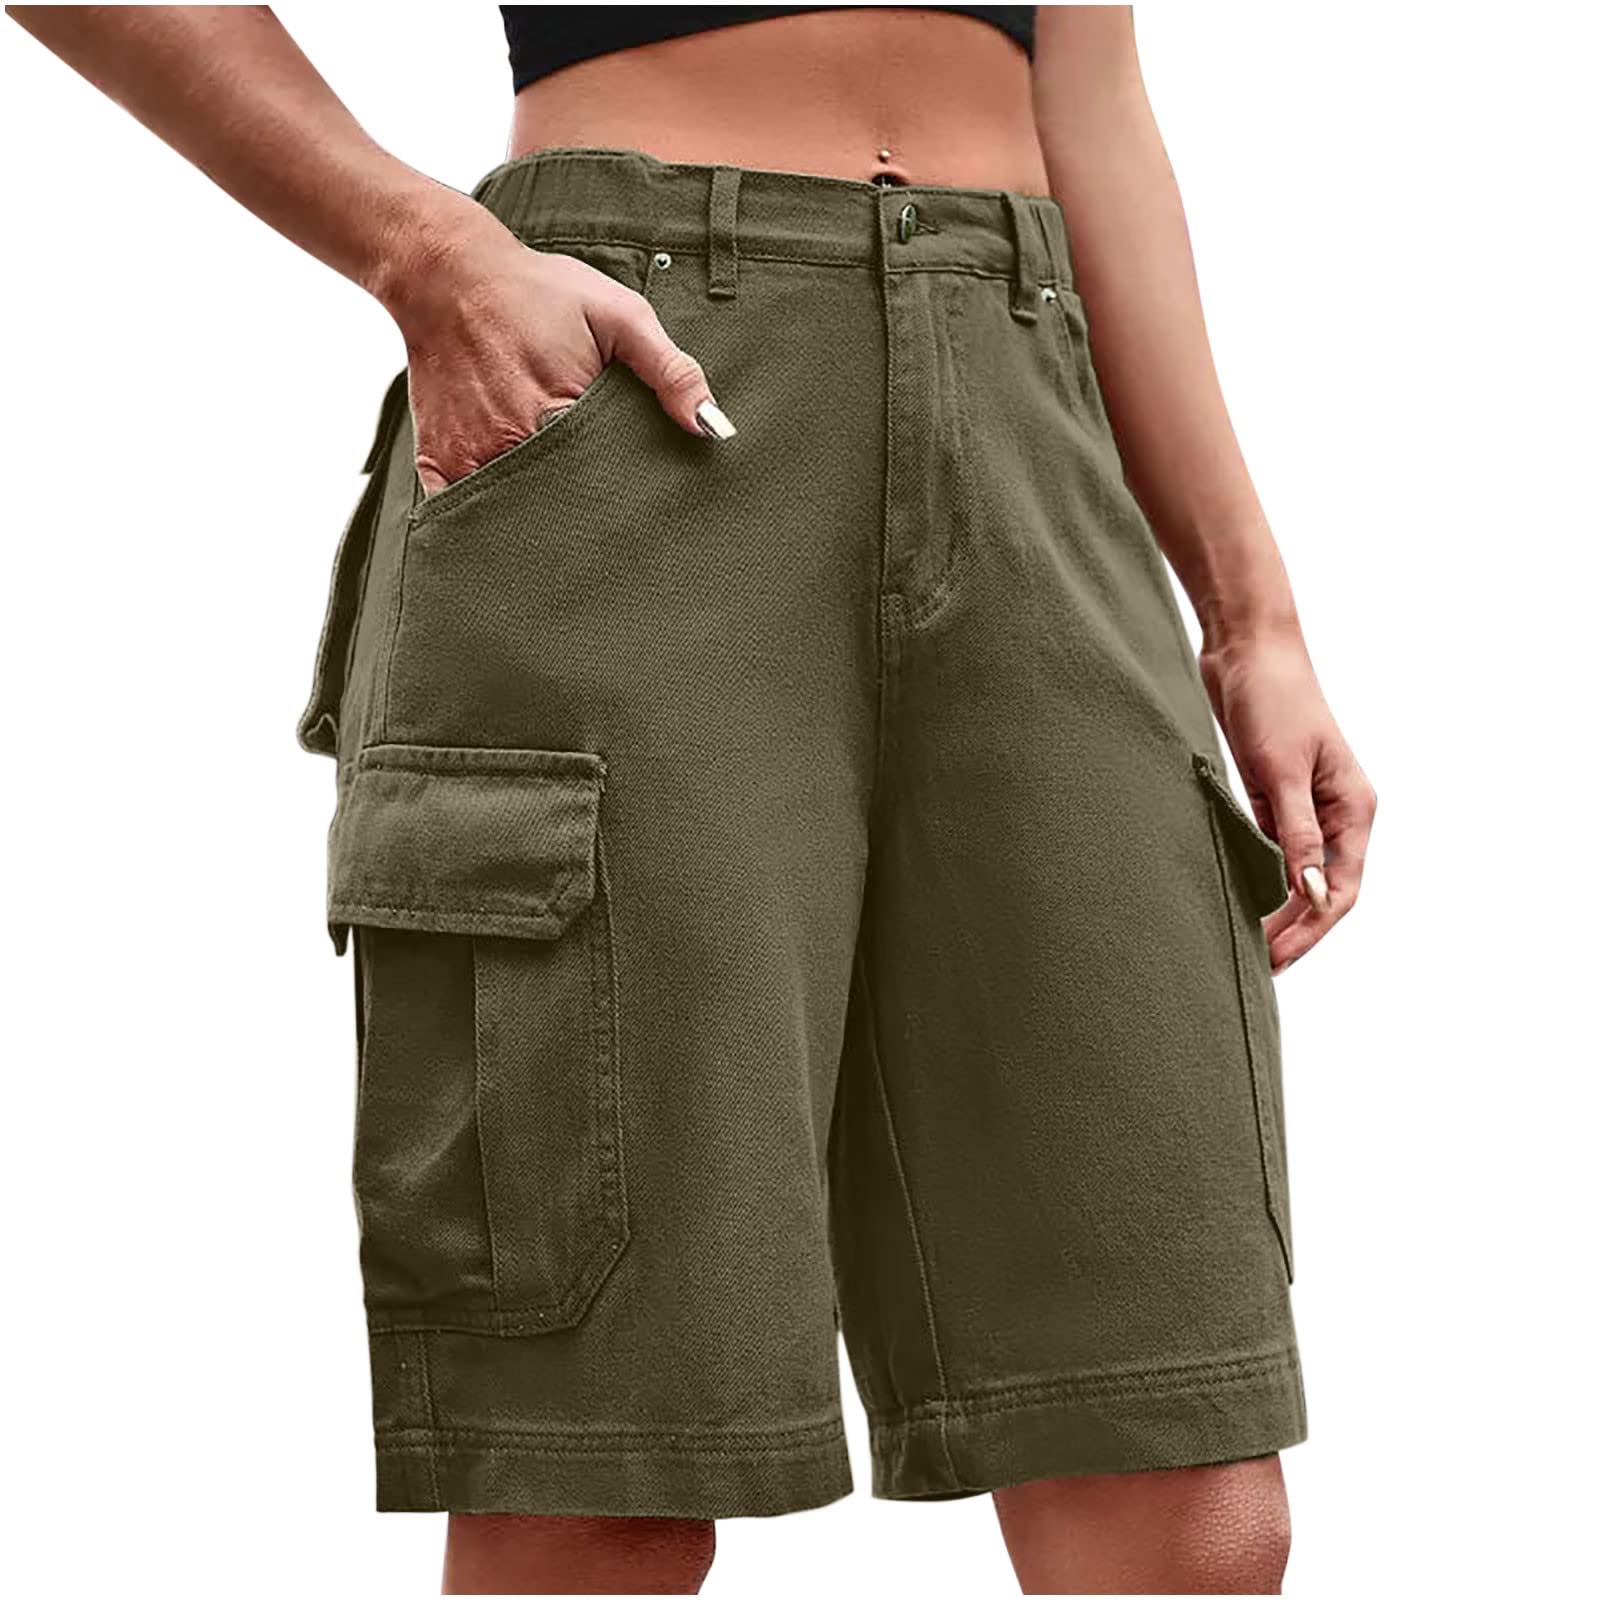 Cargo Shorts for Women, Multi-Pocket Hiking Shorts Zipper Up